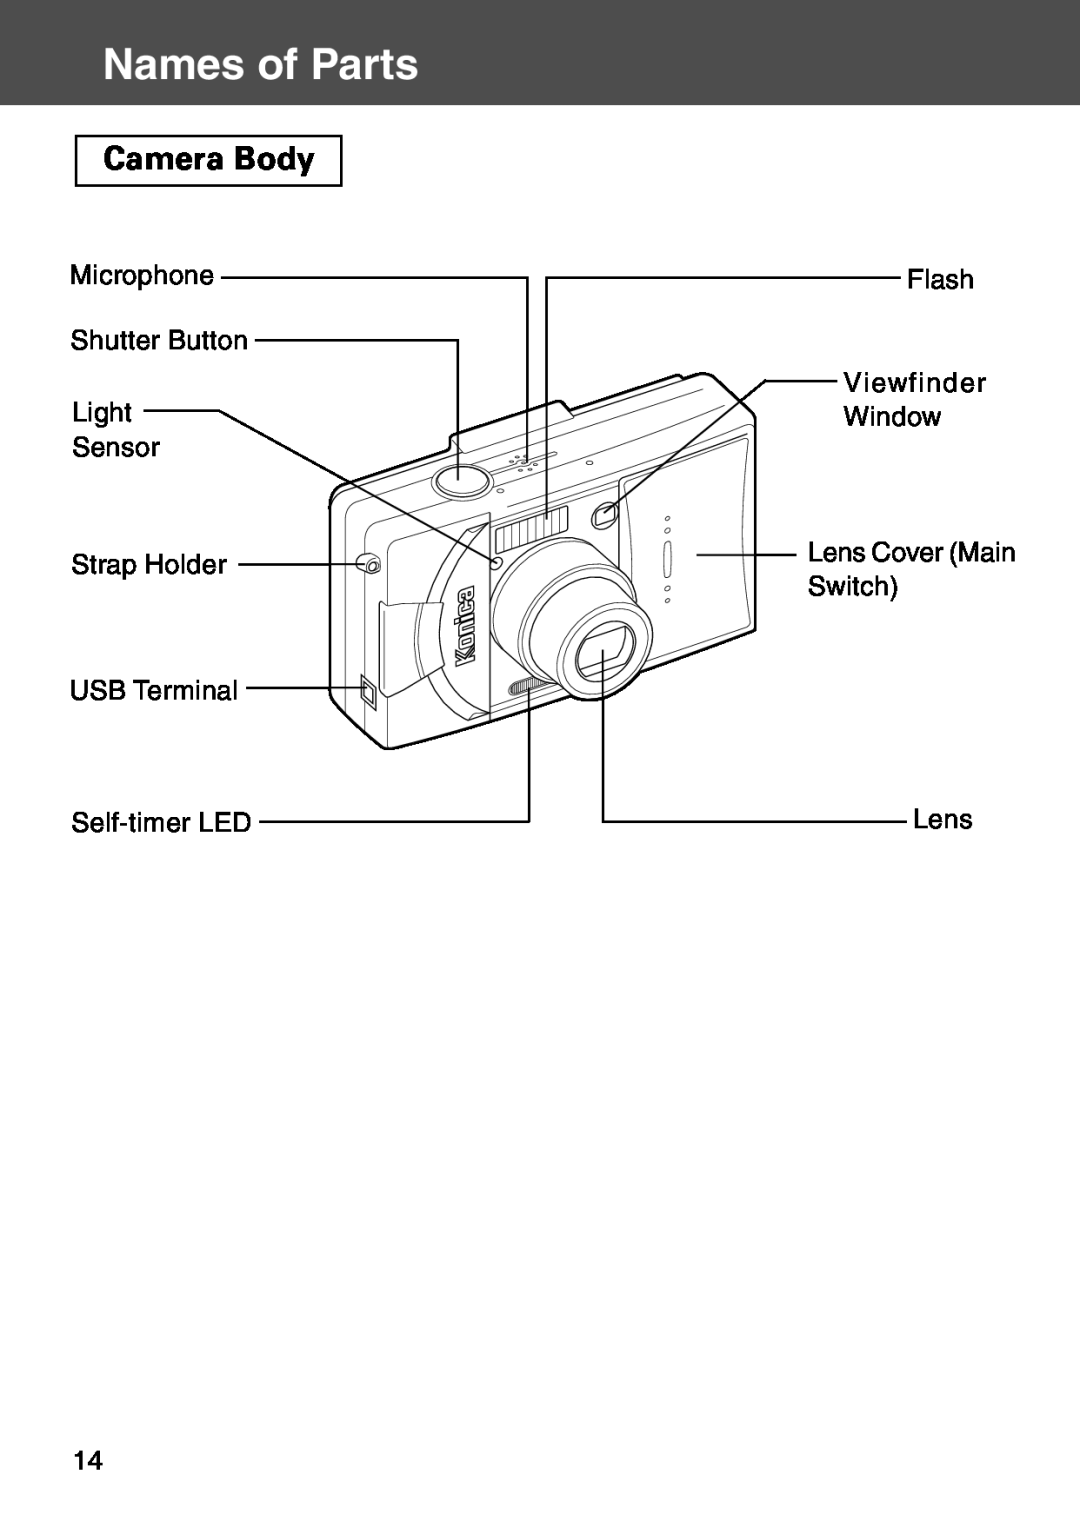 Konica Minolta KD-500Z user manual Names of Parts, Camera Body 